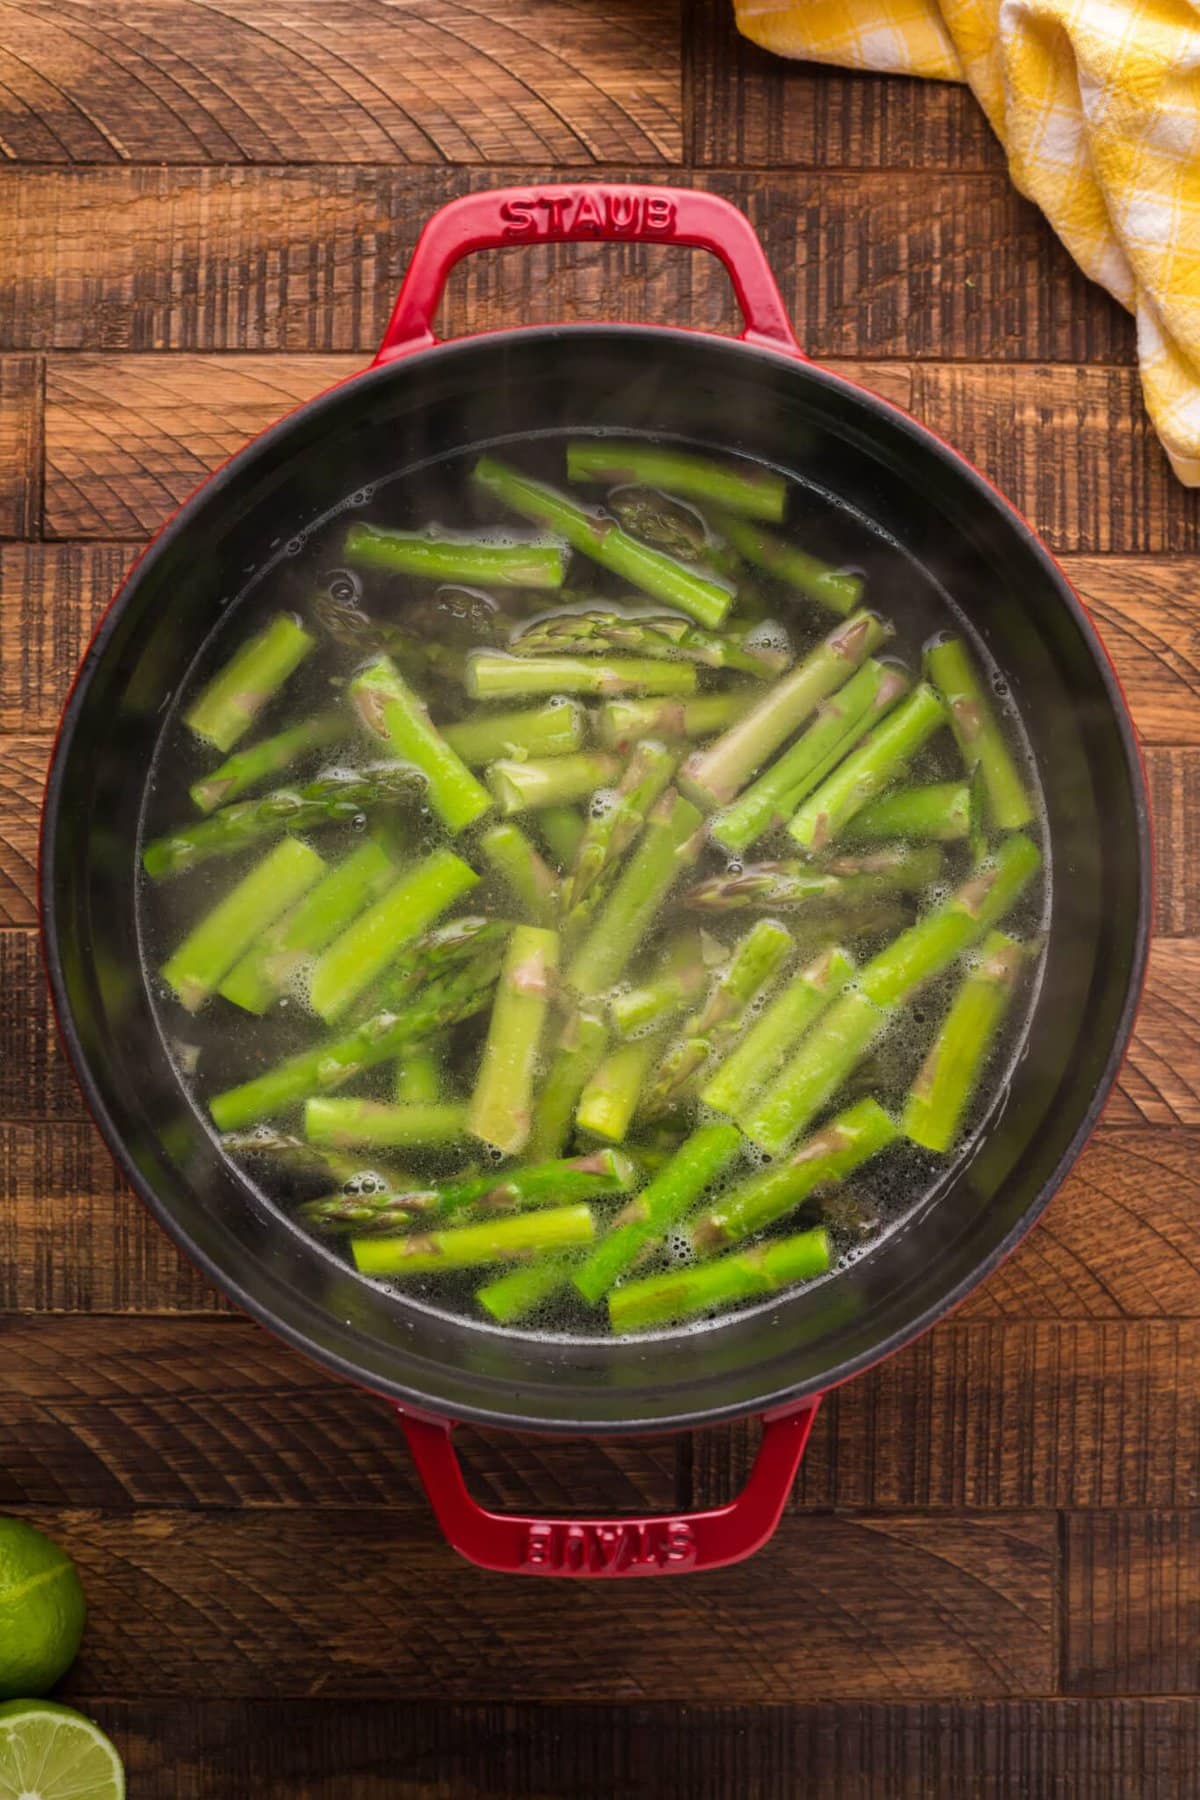 Boiling the asparagus.